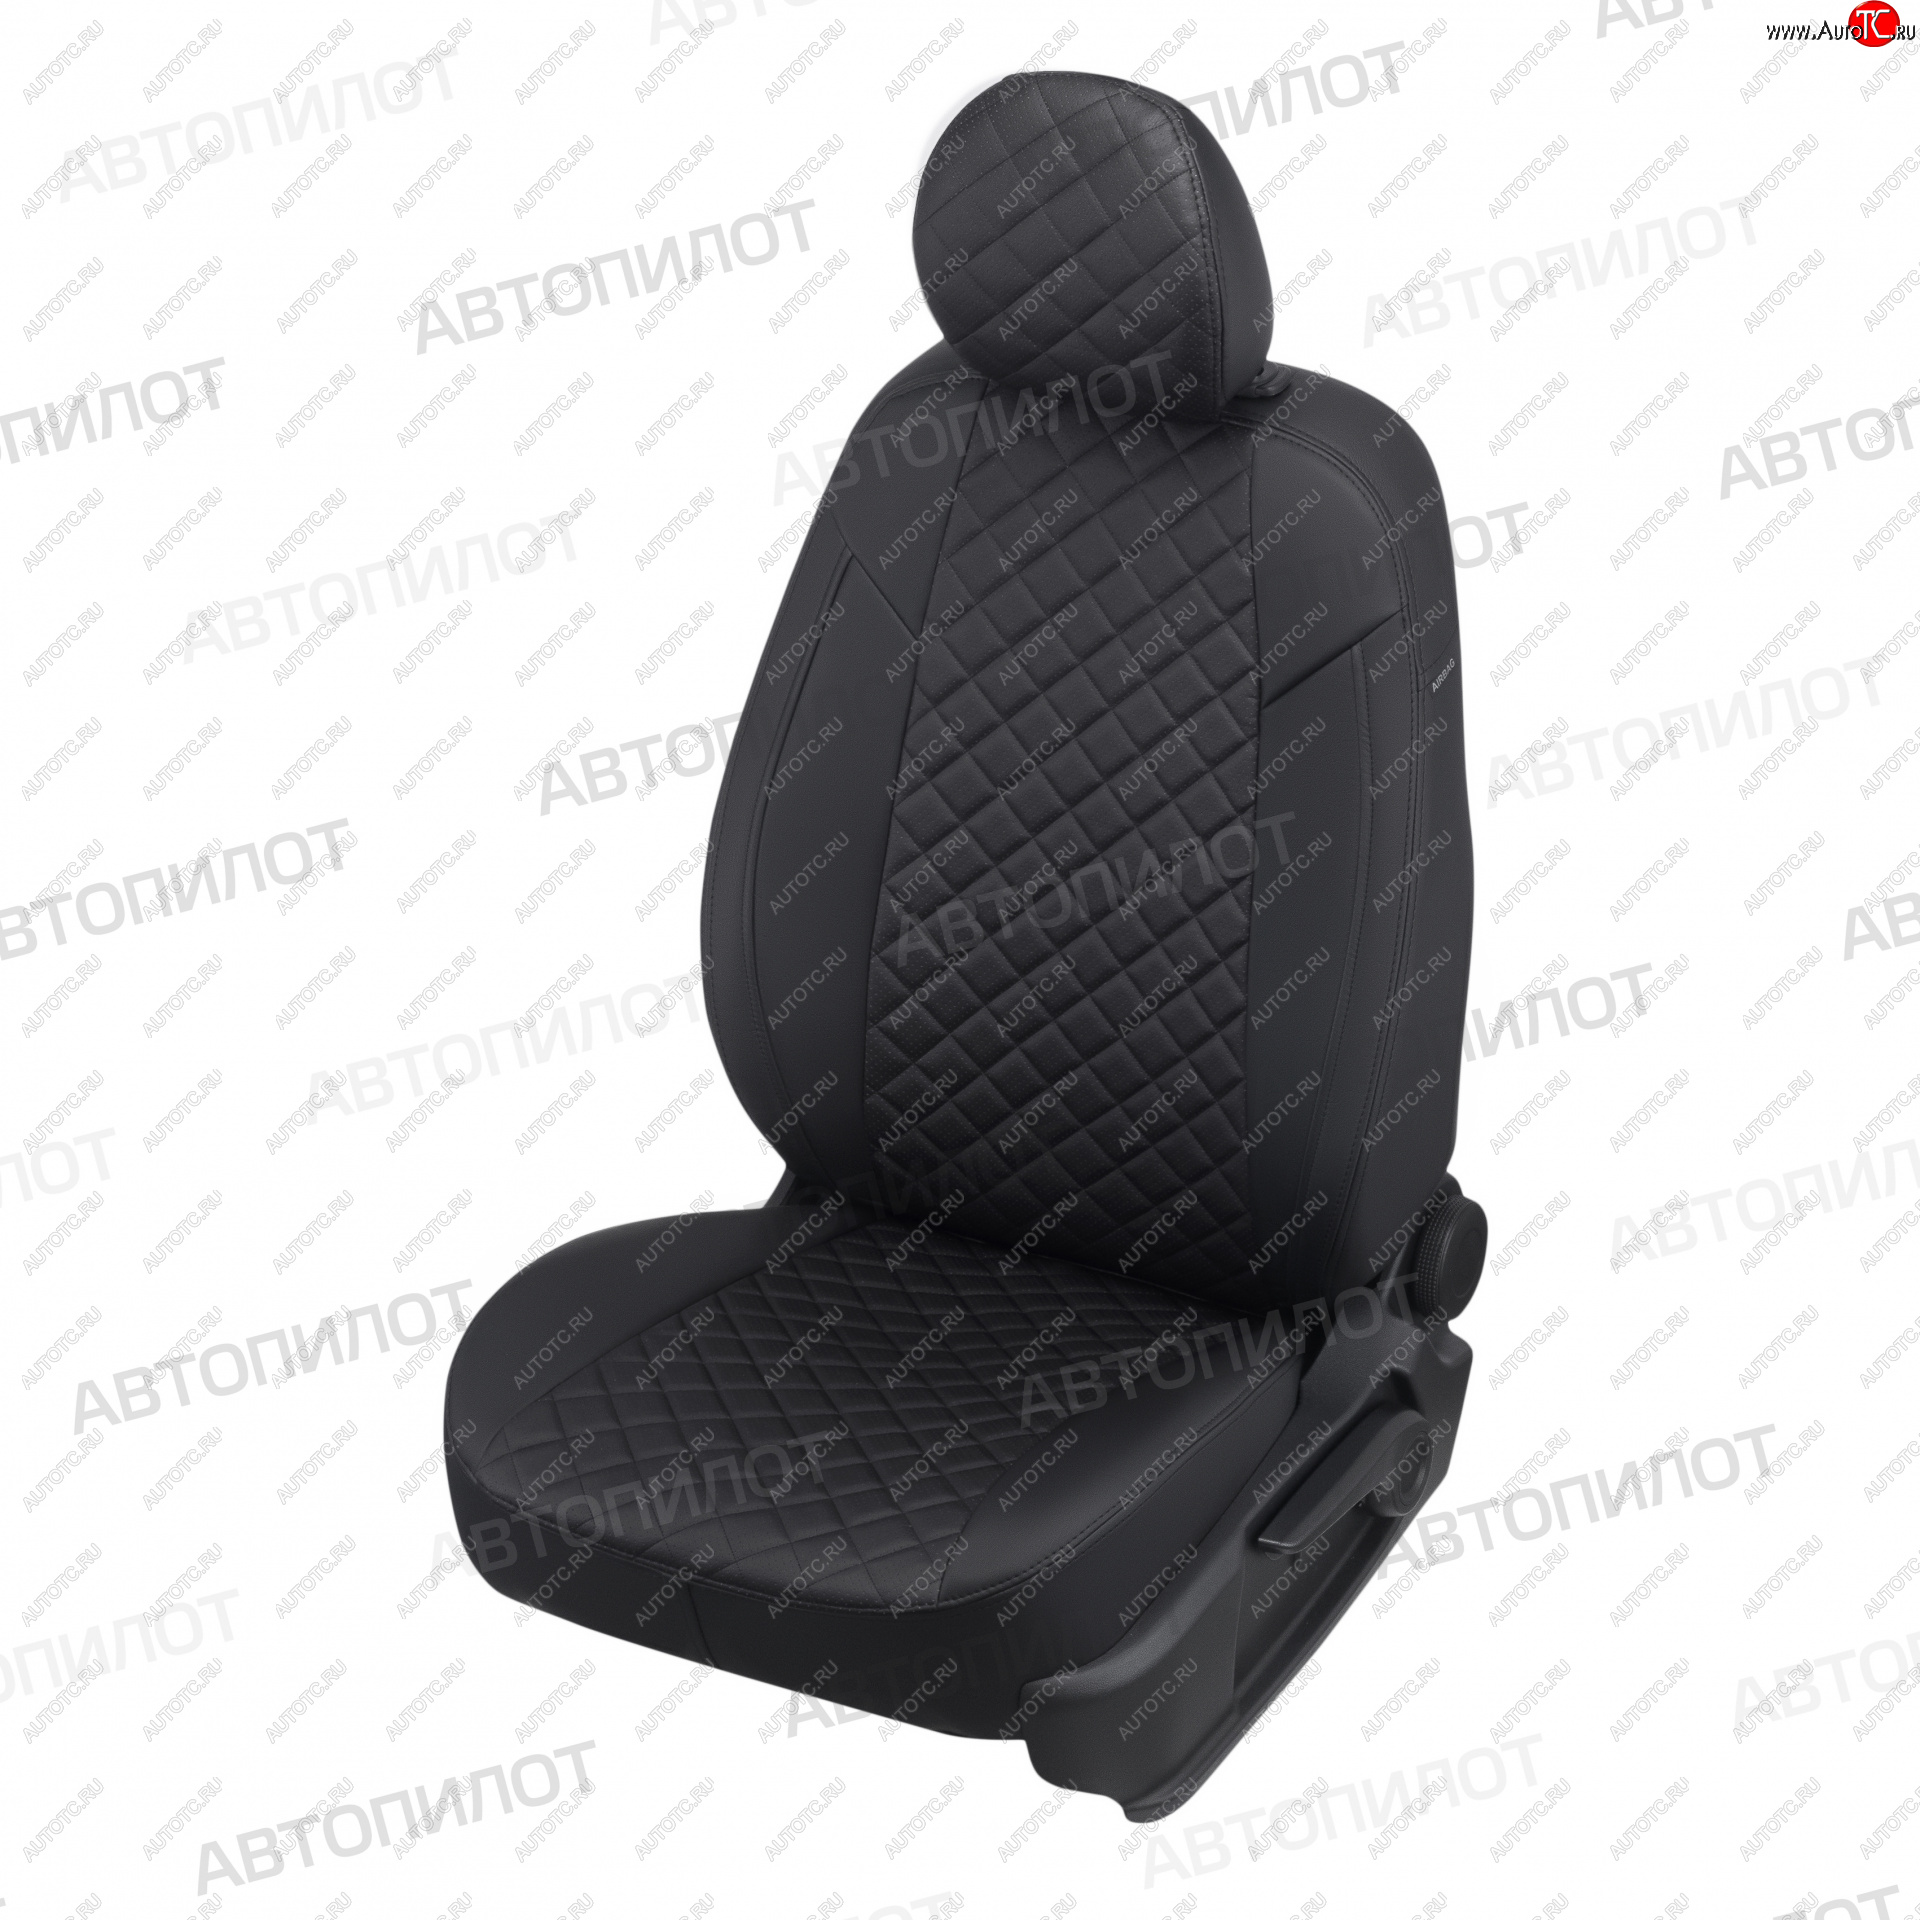 13 999 р. Чехлы сидений (экокожа) Автопилот Ромб  KIA Rio  2 JB (2005-2011) (черный)